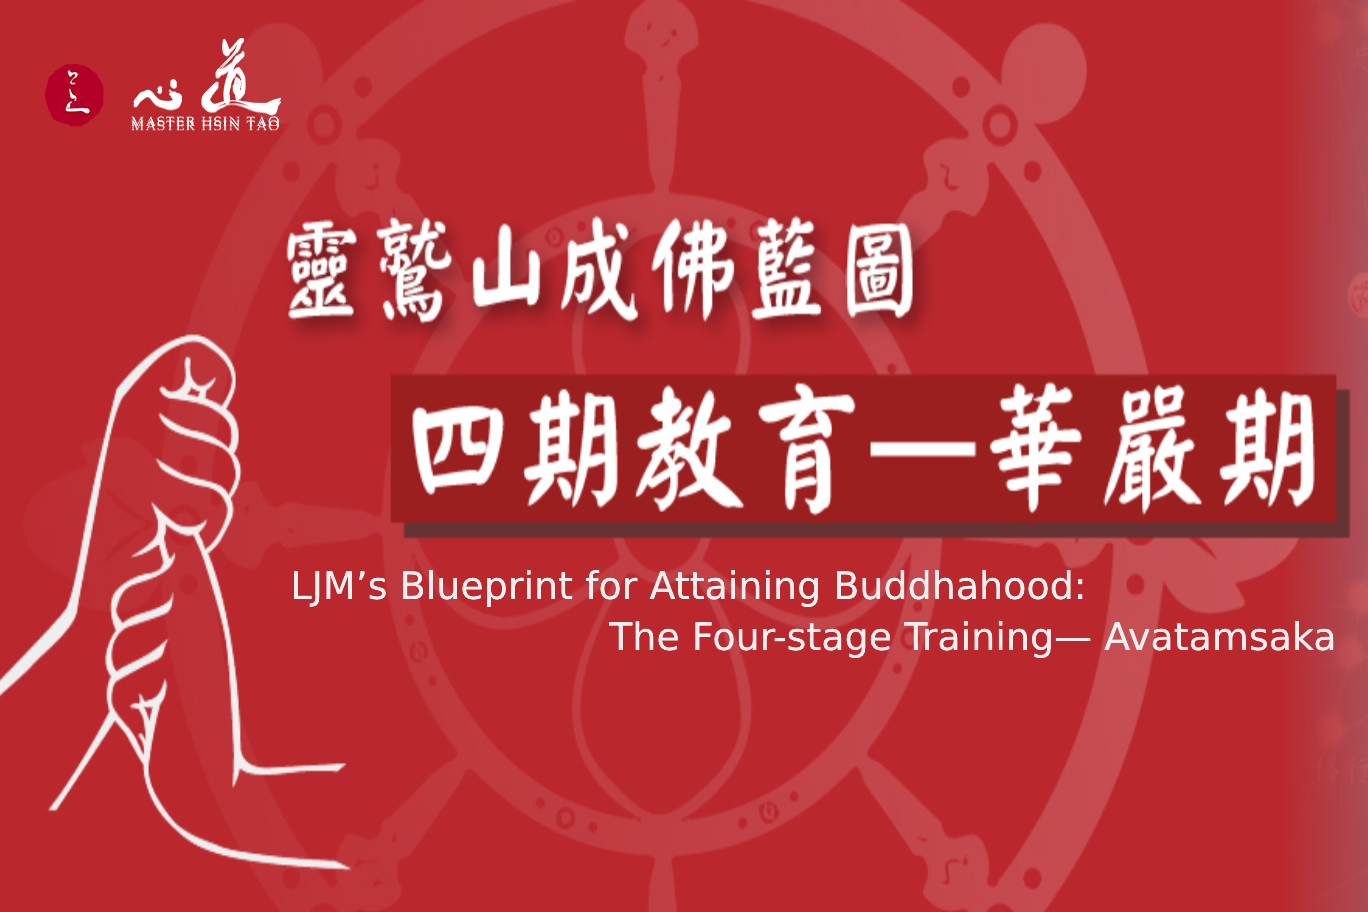 LJM’s Blueprint for Attaining Buddhahood: The Four-stage Training— Avatamsaka - MasterHsinTao